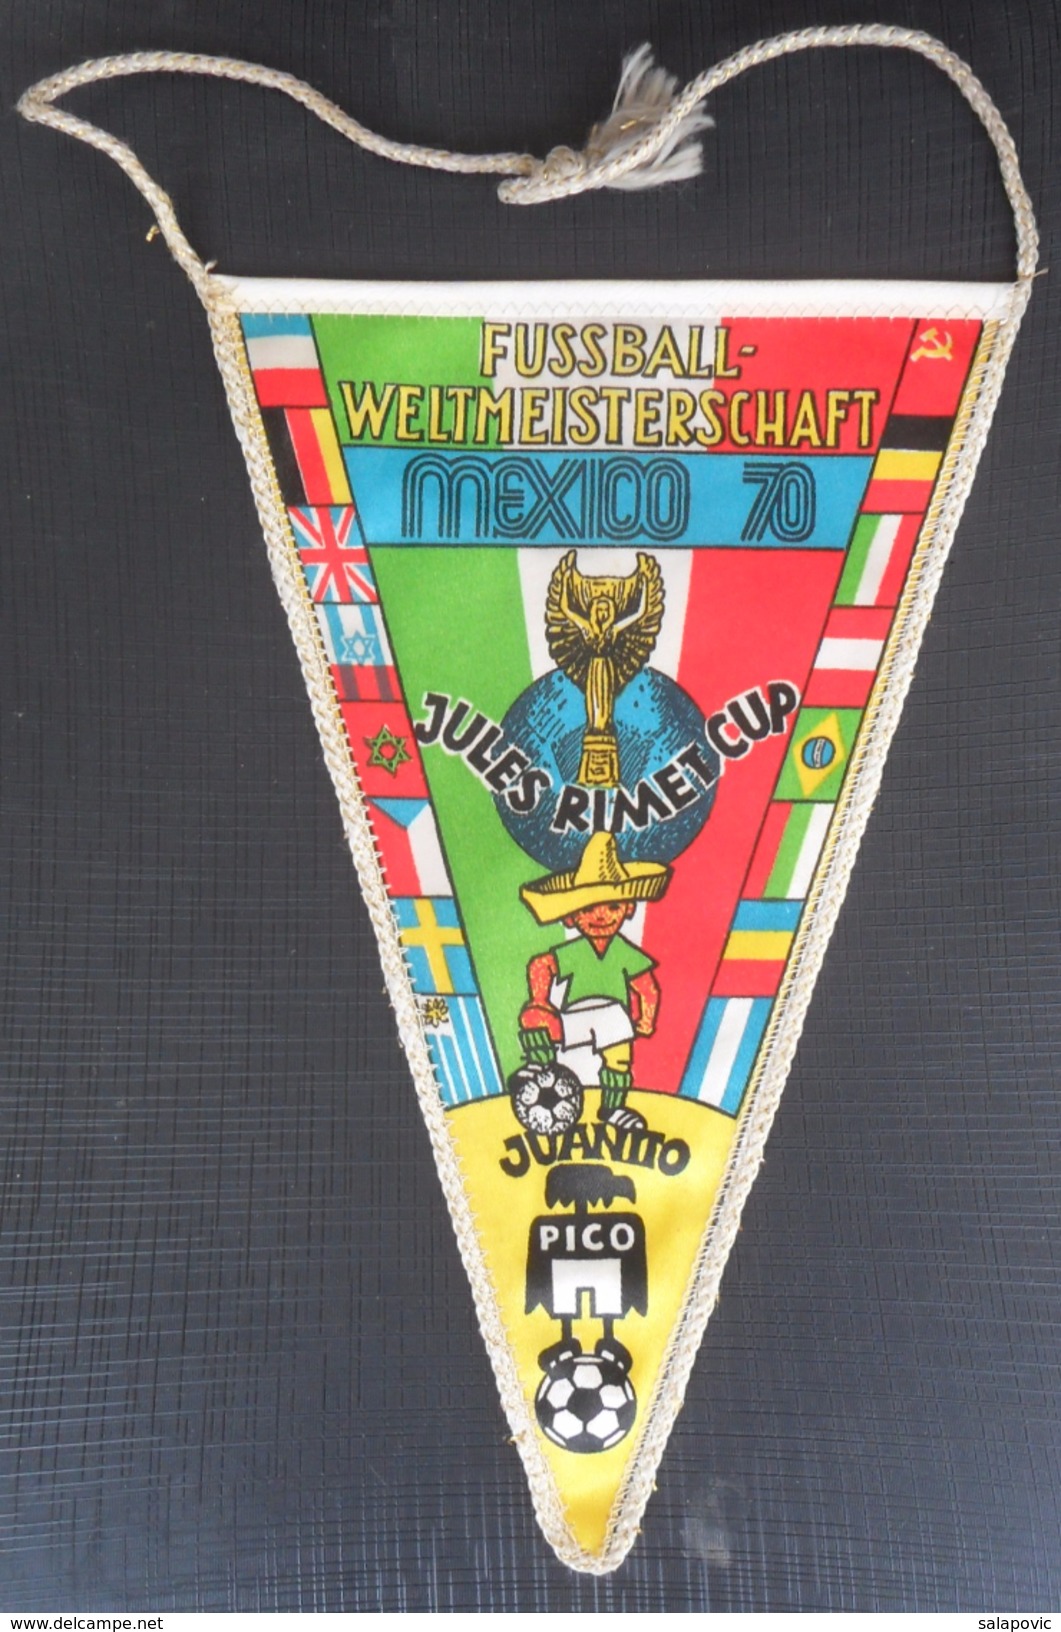 Fußball-Weltmeisterschaft 1970 Mexico,  FIFA World Cup  FOOTBALL CLUB SOCCER / FUTBOL / CALCIO, OLD PENNANT, SPORTS FLAG - Bekleidung, Souvenirs Und Sonstige